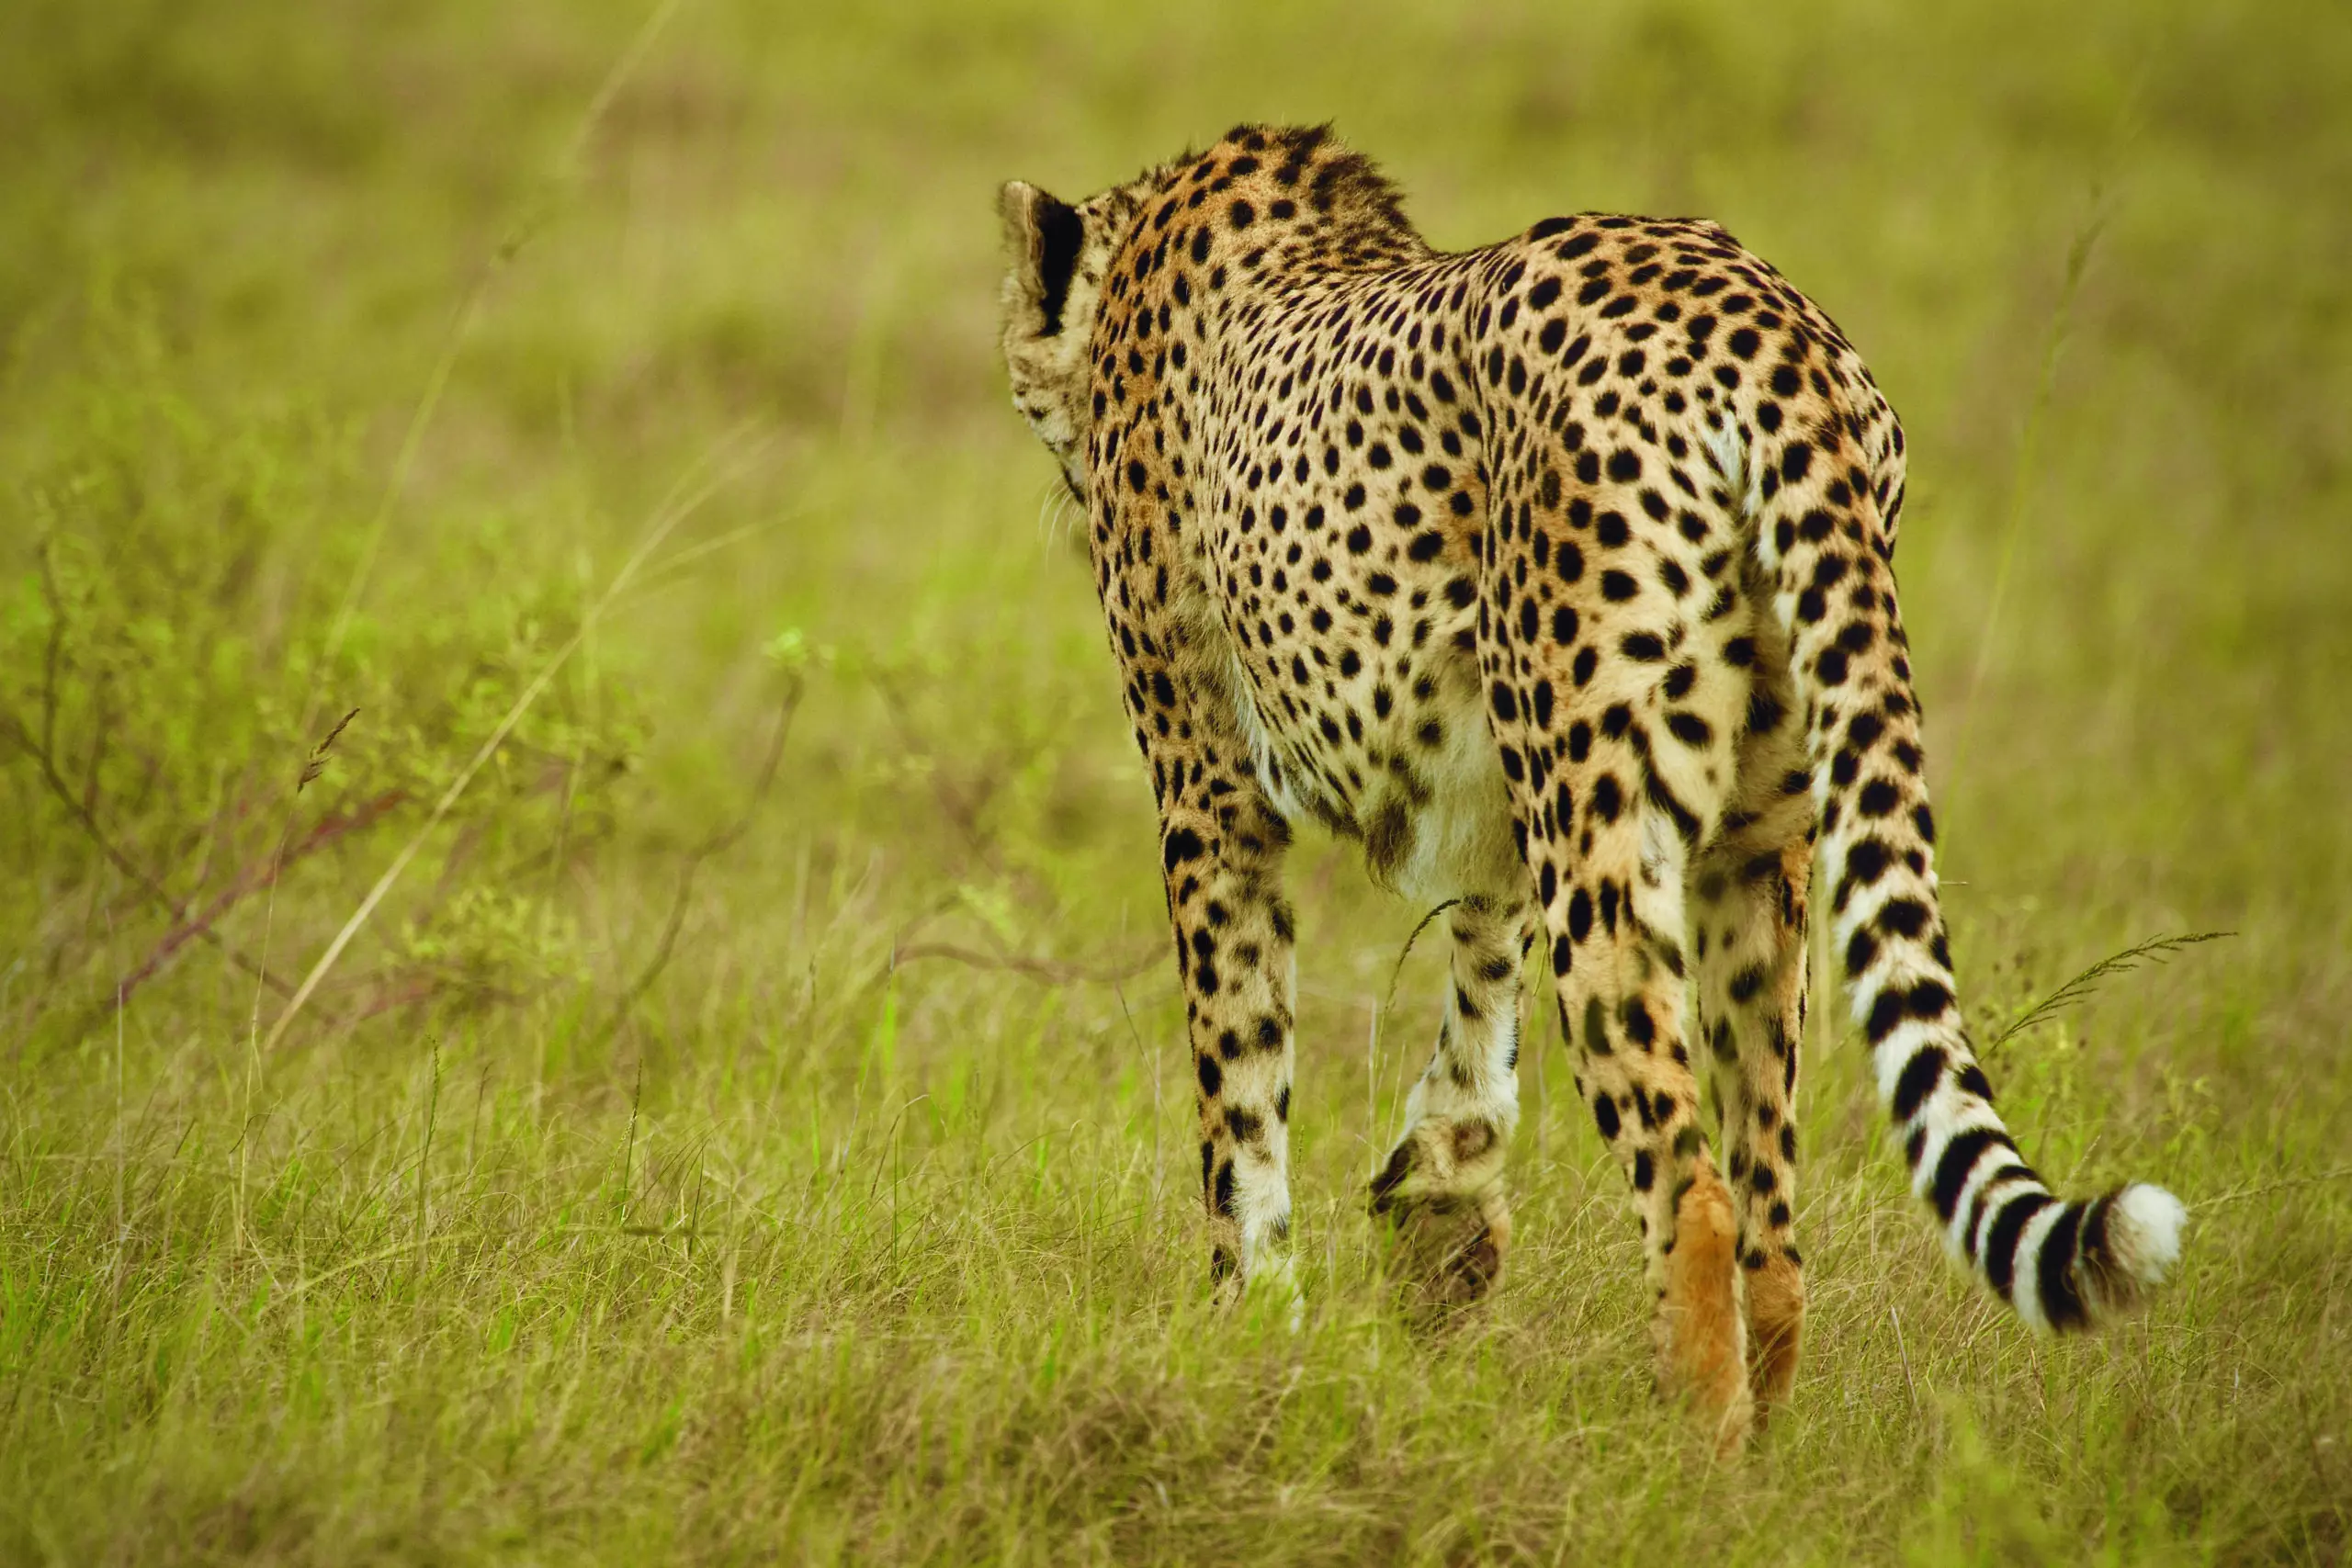 Wandbild (3417) Cheetah 2 präsentiert: Tiere,Aus Afrika